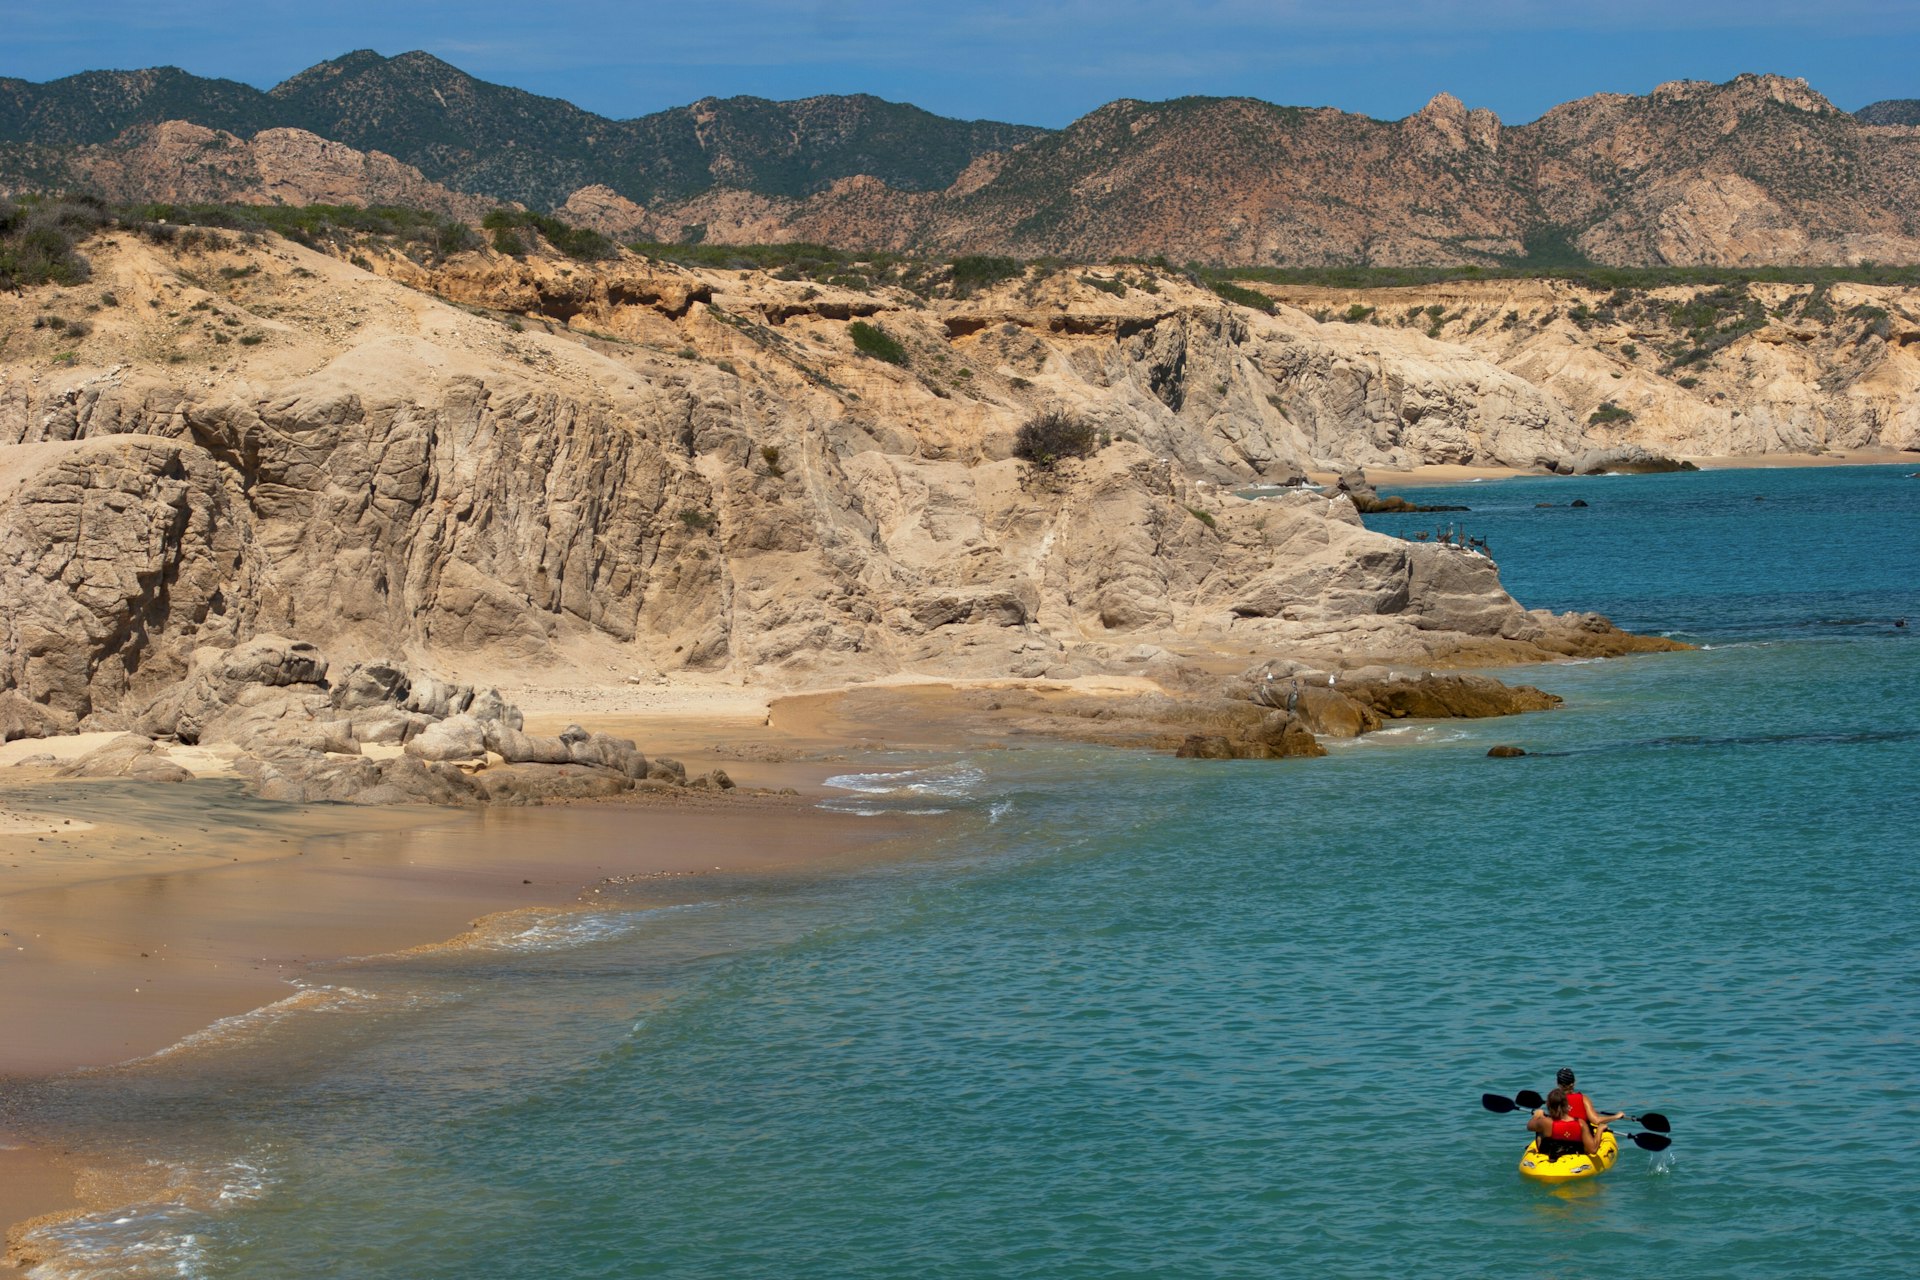 Kayak padding on the sea with the desert on the horizon